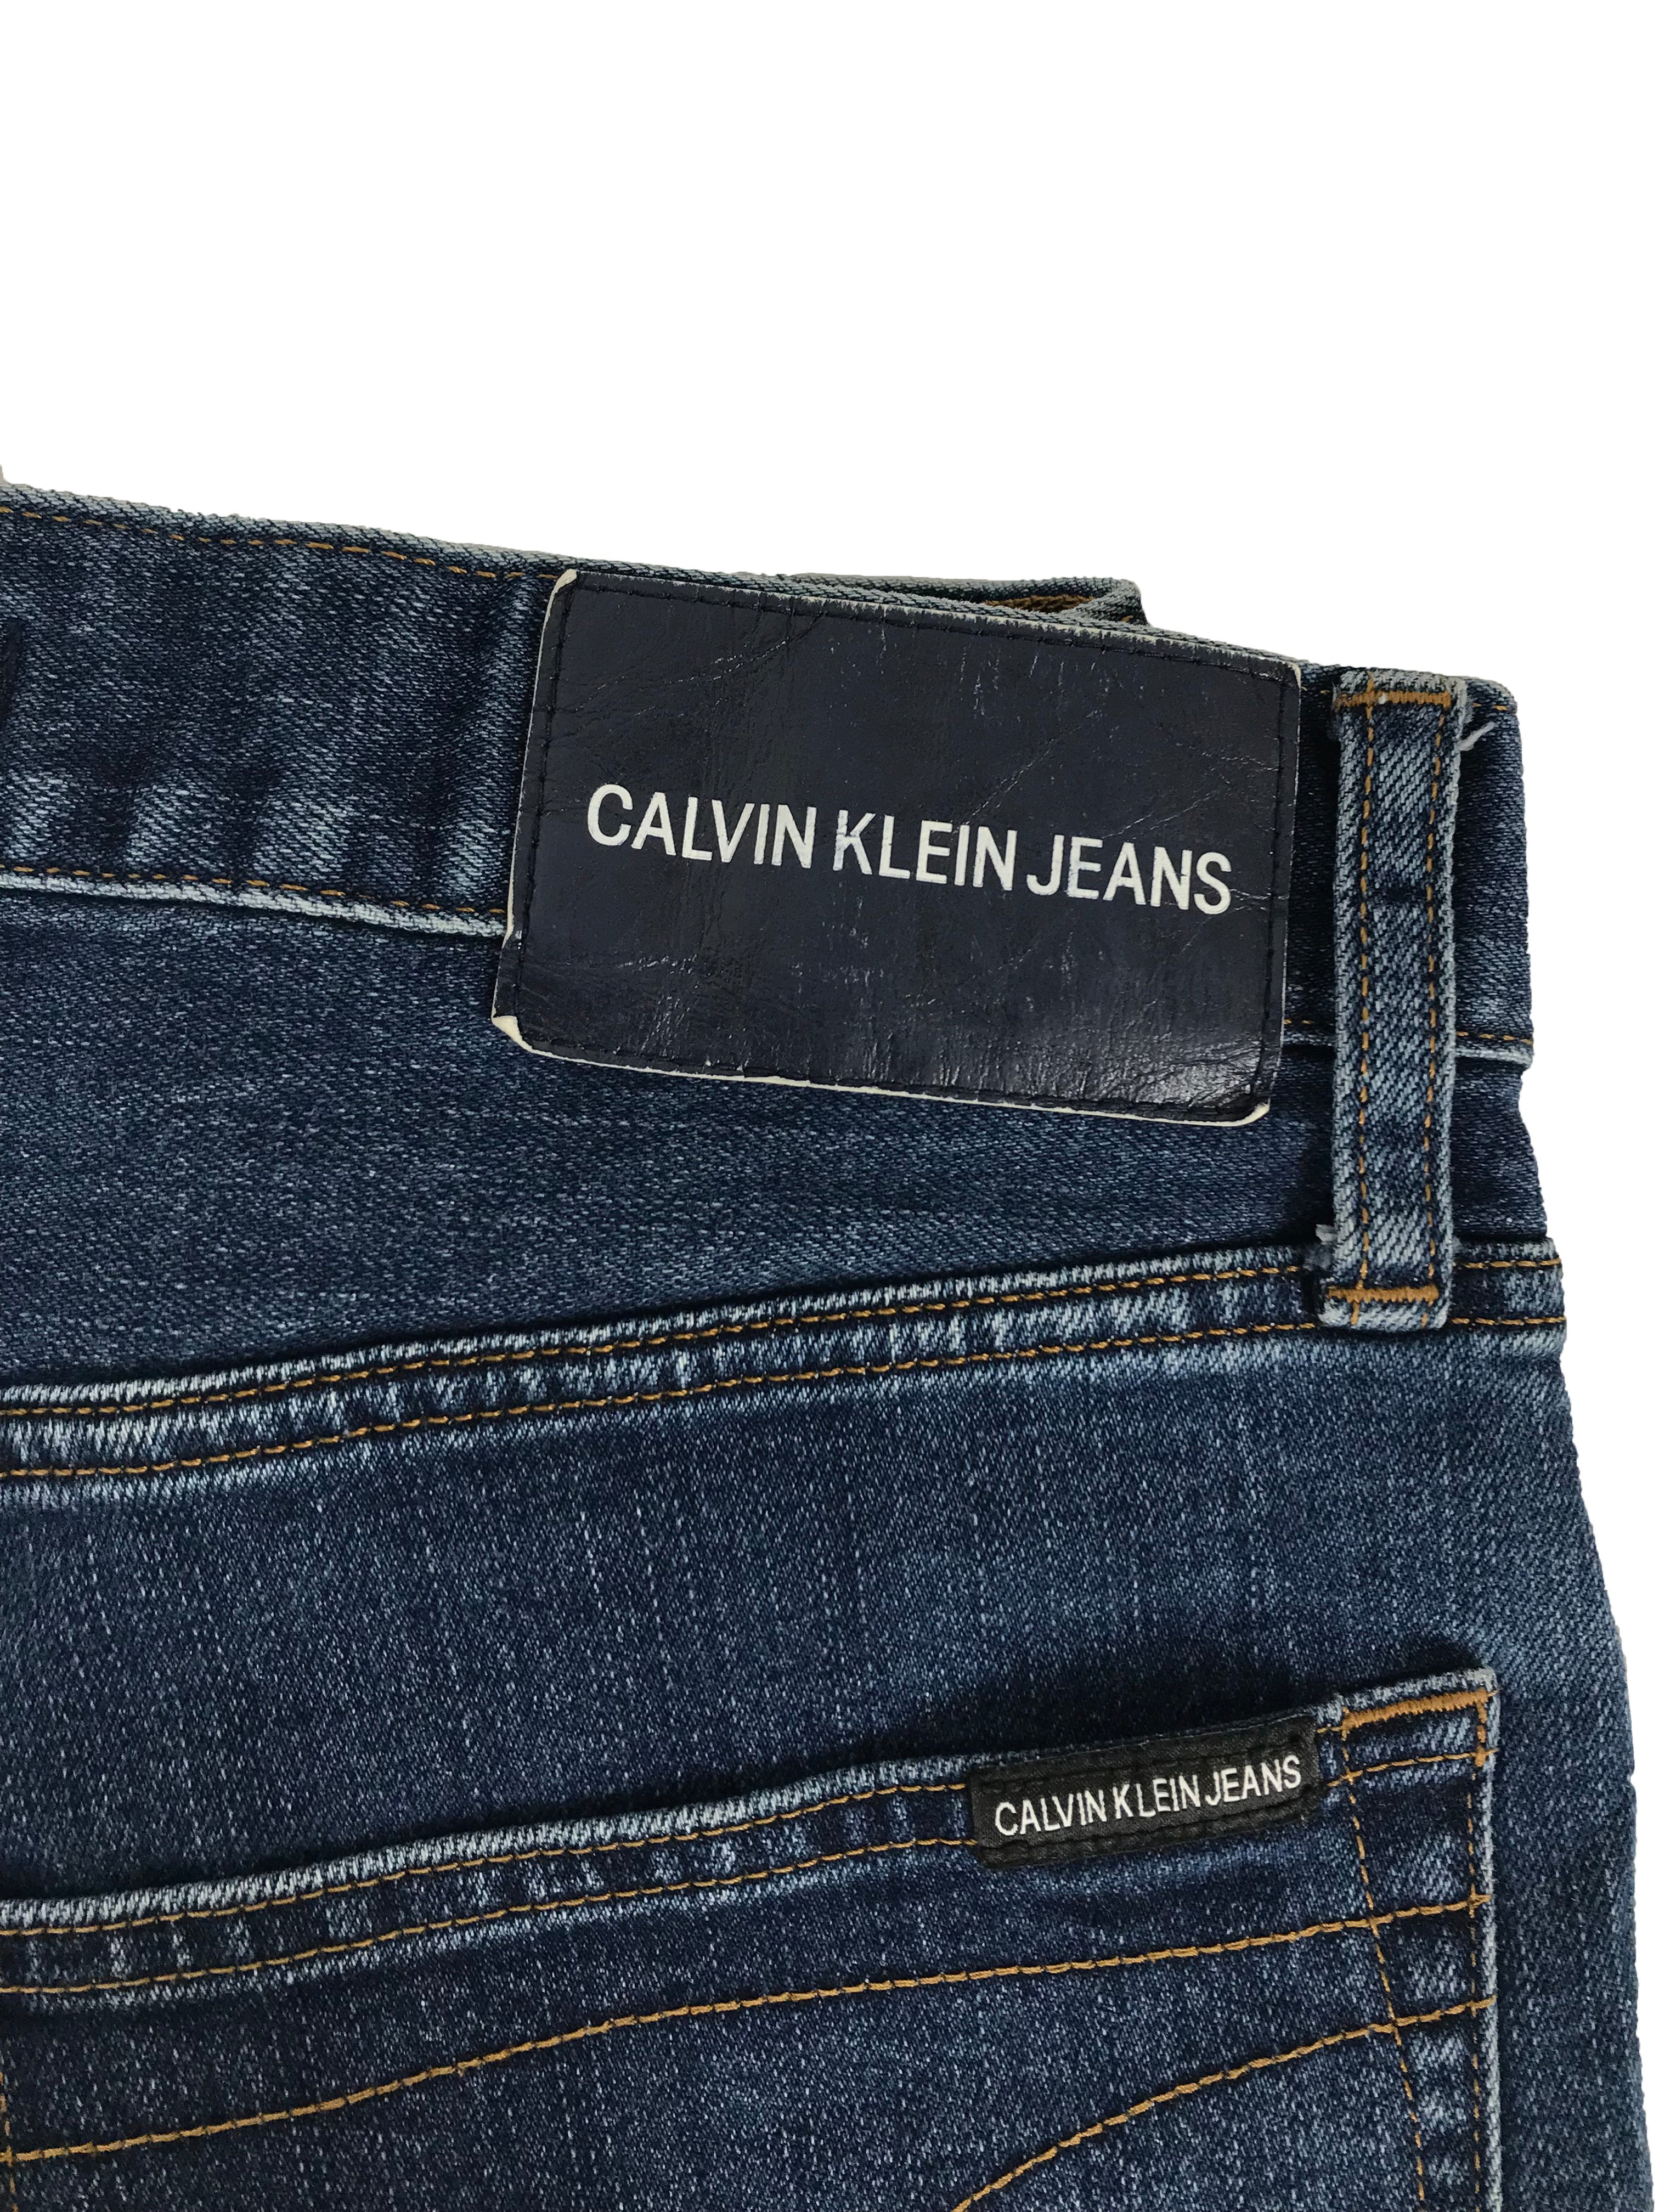 Calvin Klein Denim Jeans Straight Leg Women's Size 30